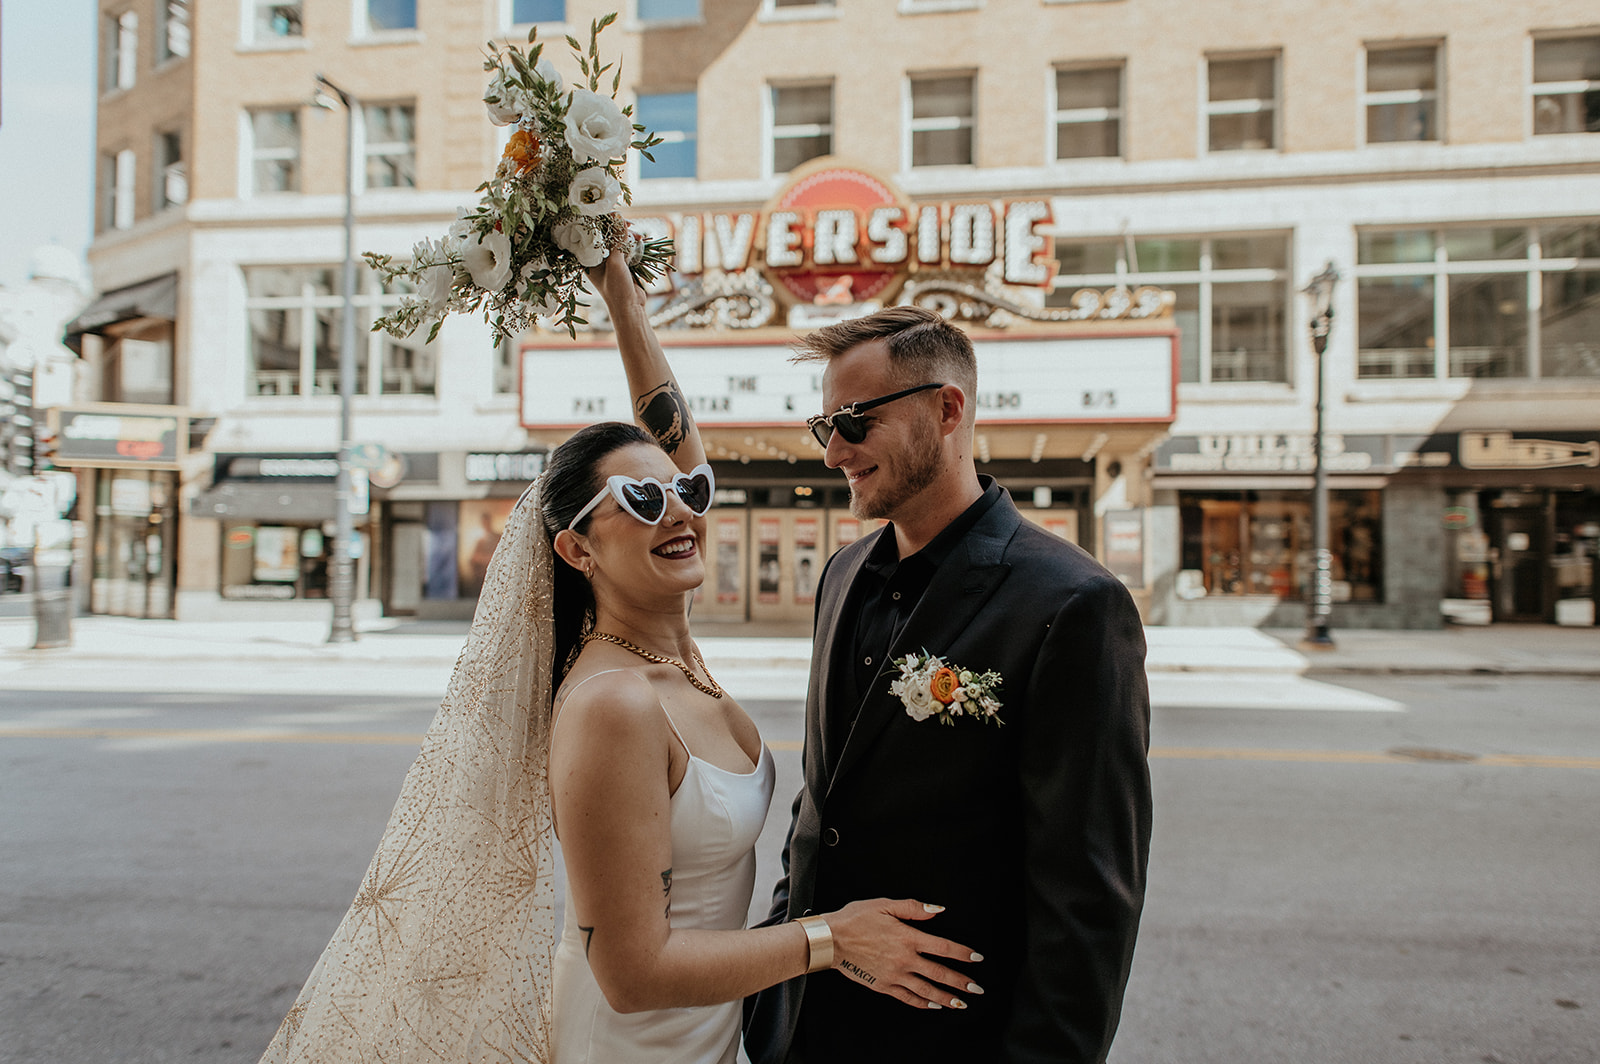 Bride and groom pose in downtown milkwauee wedding wearing sunglasses